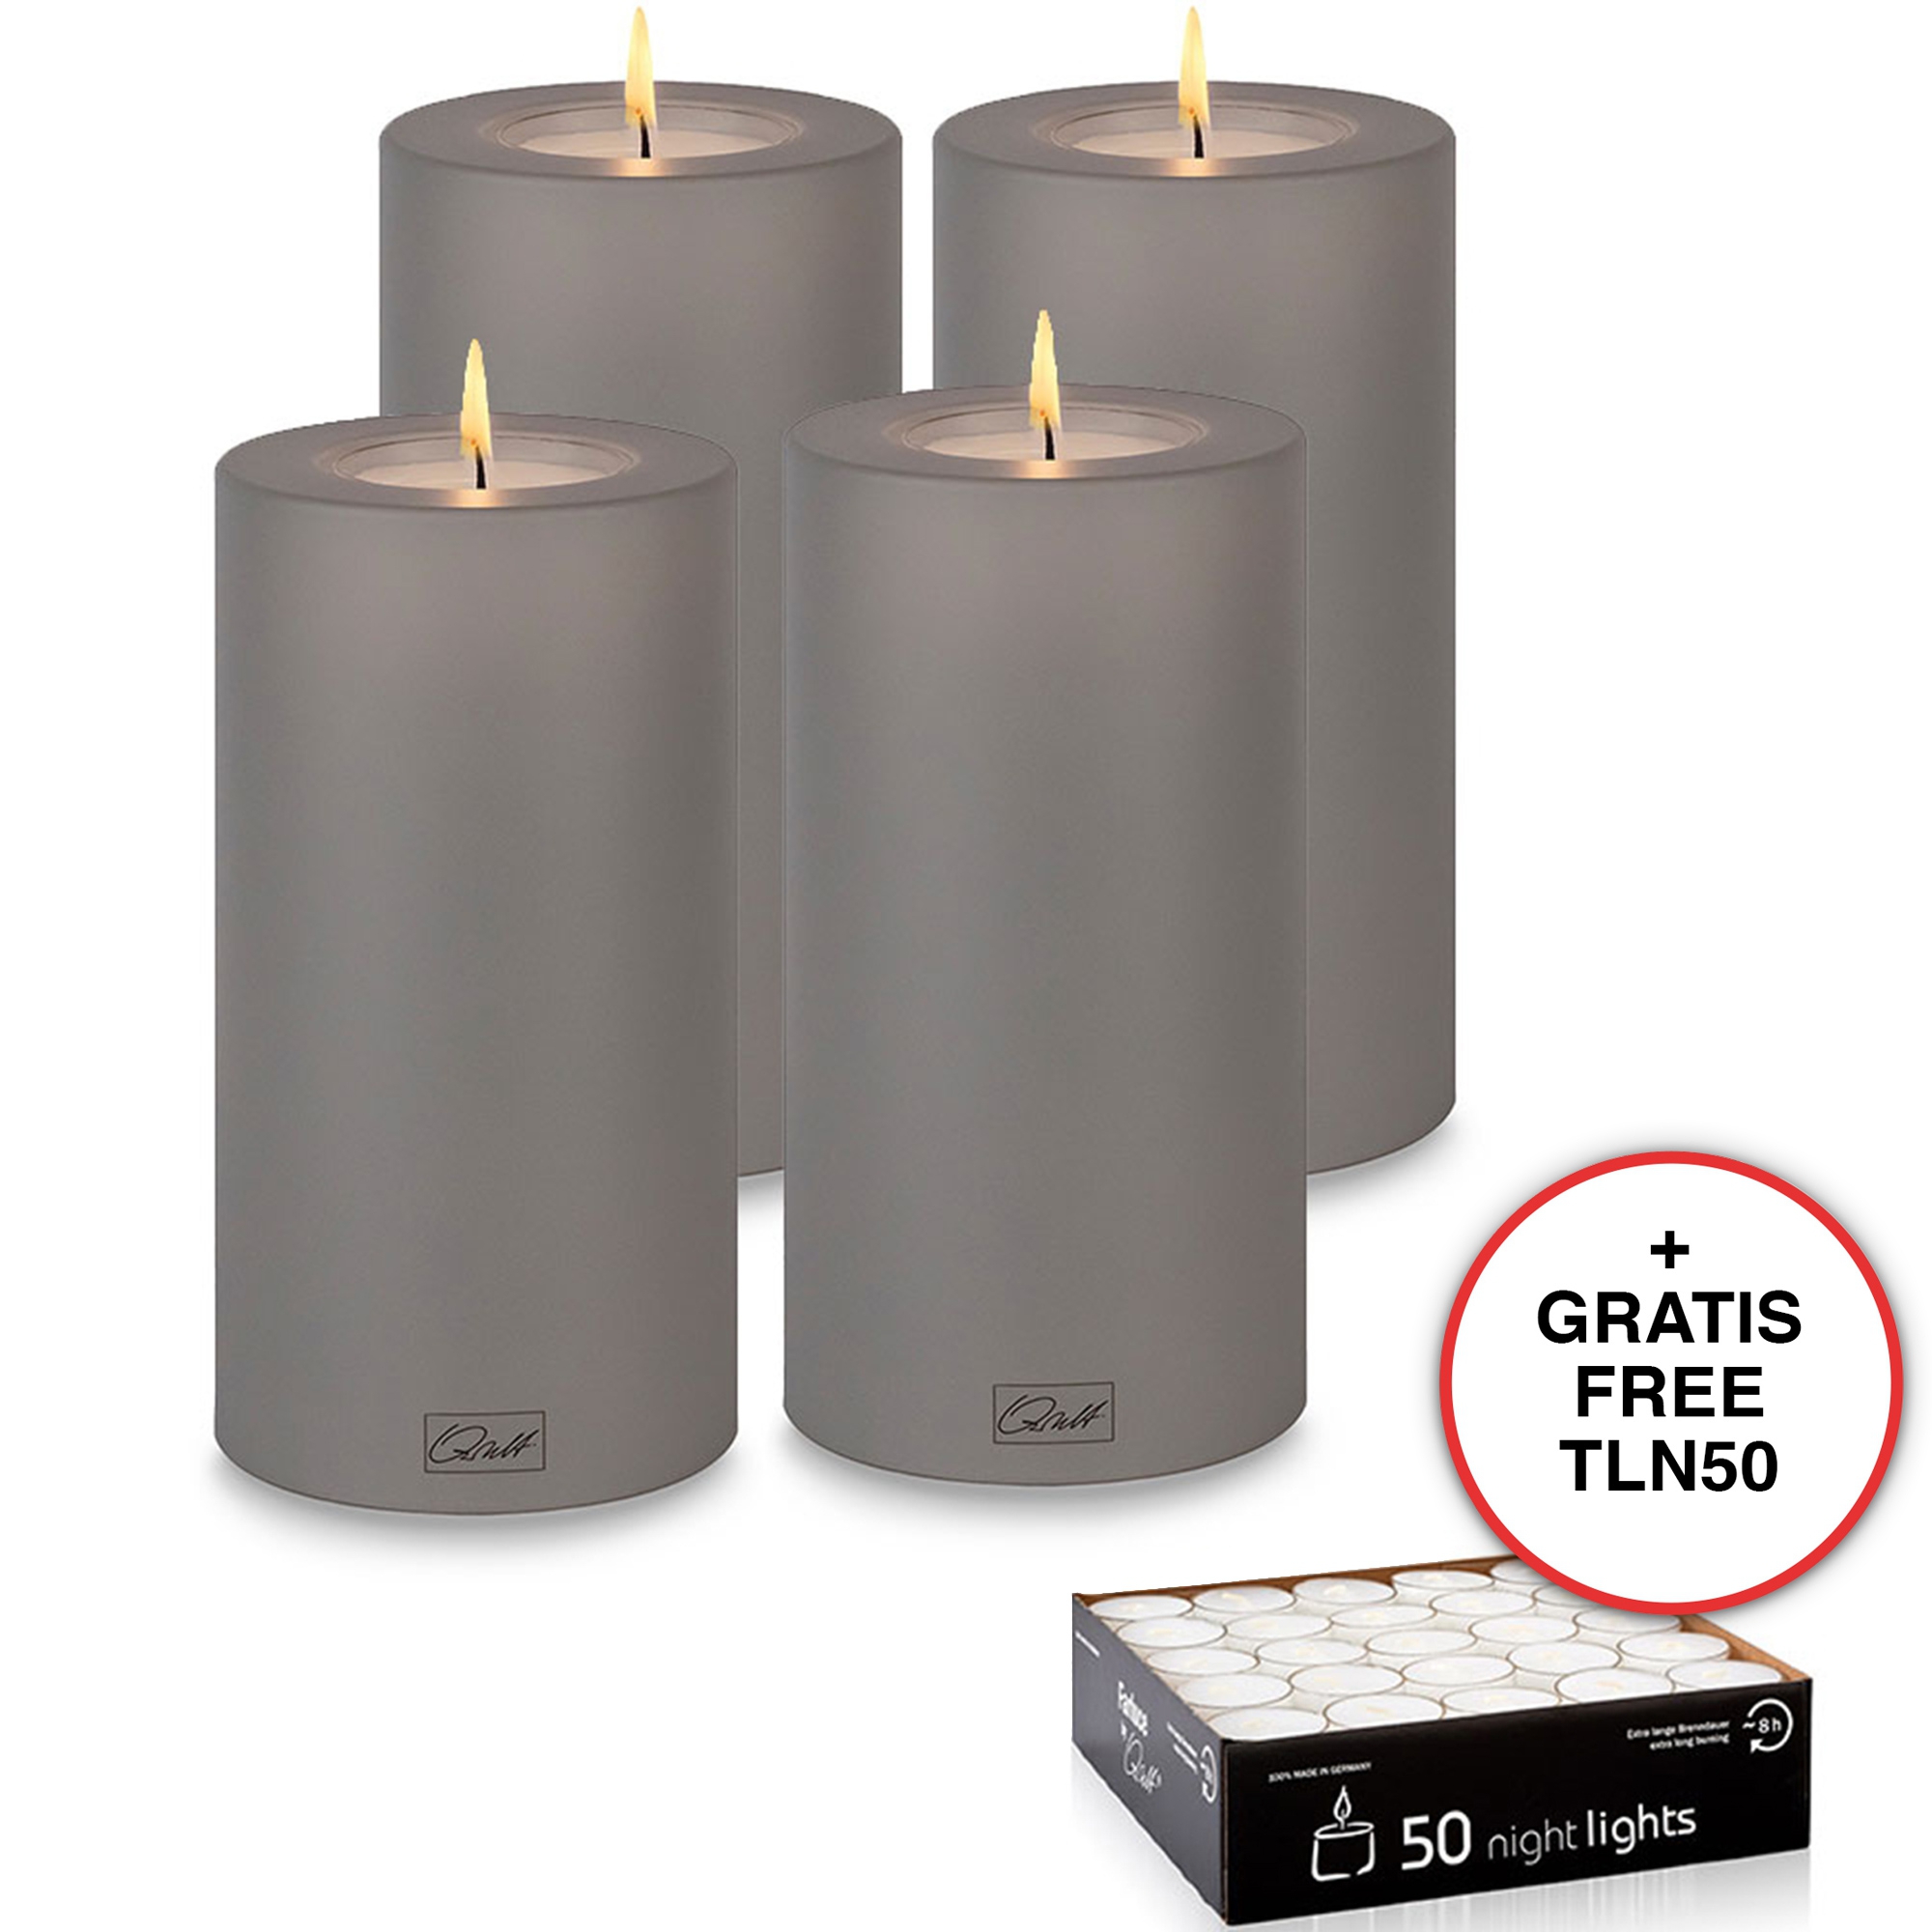 Qult Farluce Trend - Tealight Candle Holder - stonegrey - Ø 8 cm H 15 cm - Set of 4